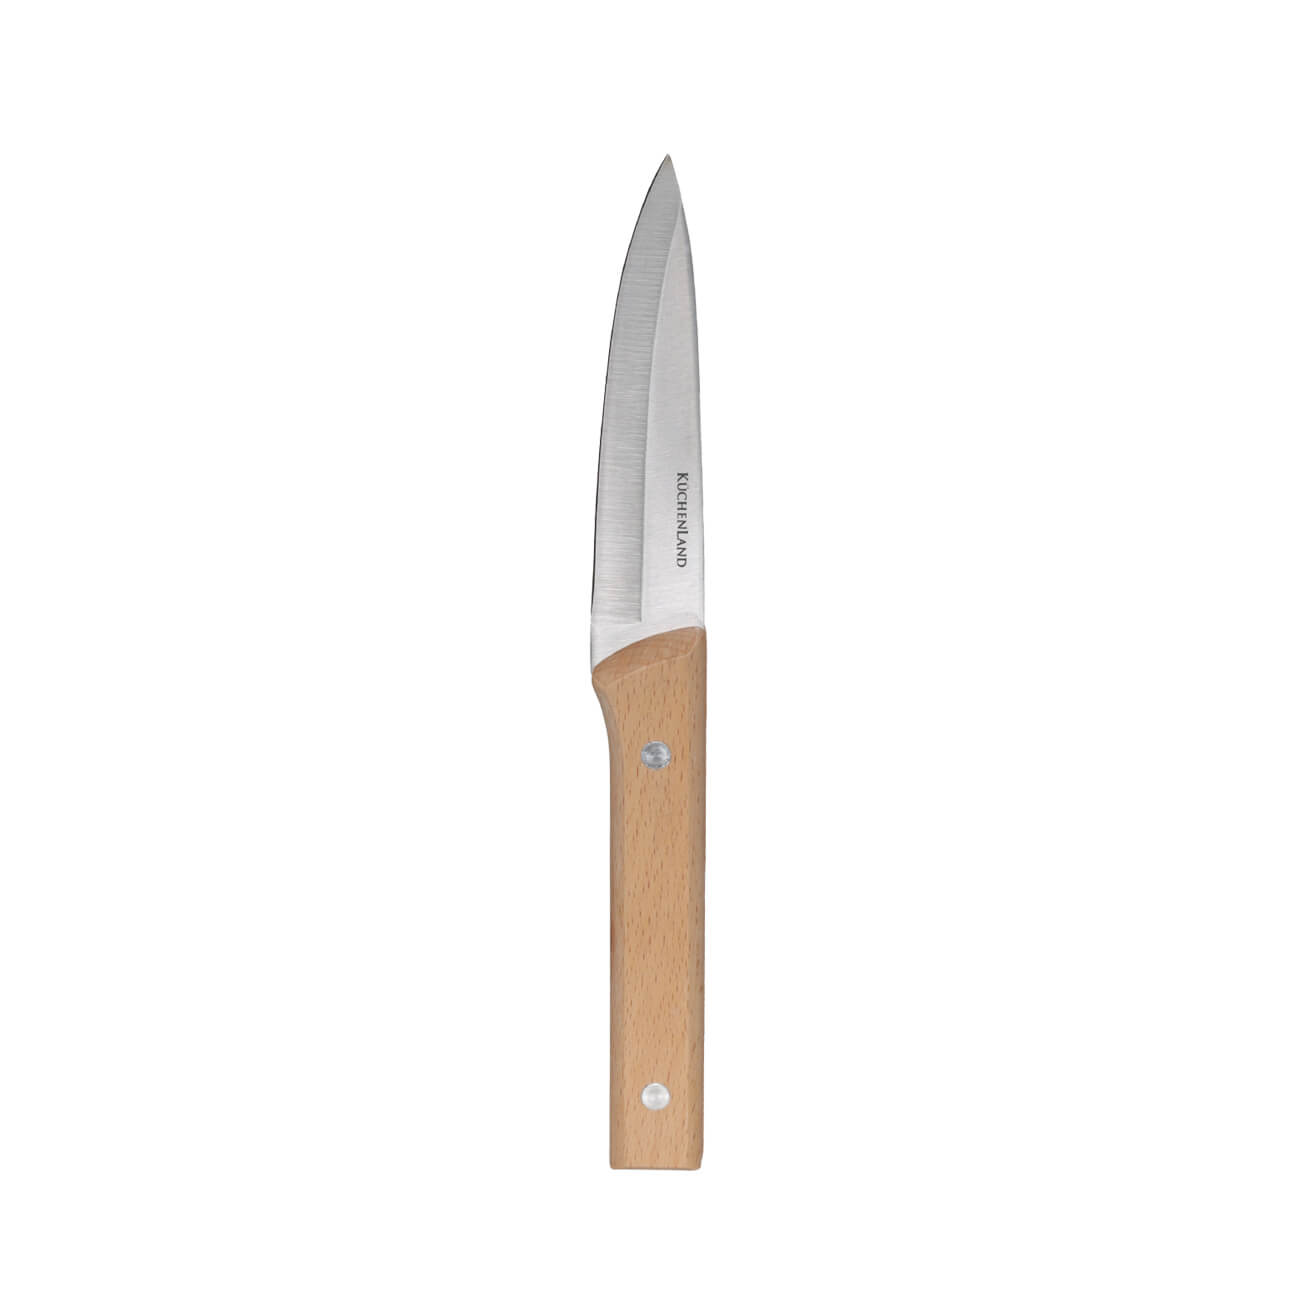 Нож для чистки овощей, 9 см, сталь/дерево, Eco home нож для чистки овощей comfort k1291814